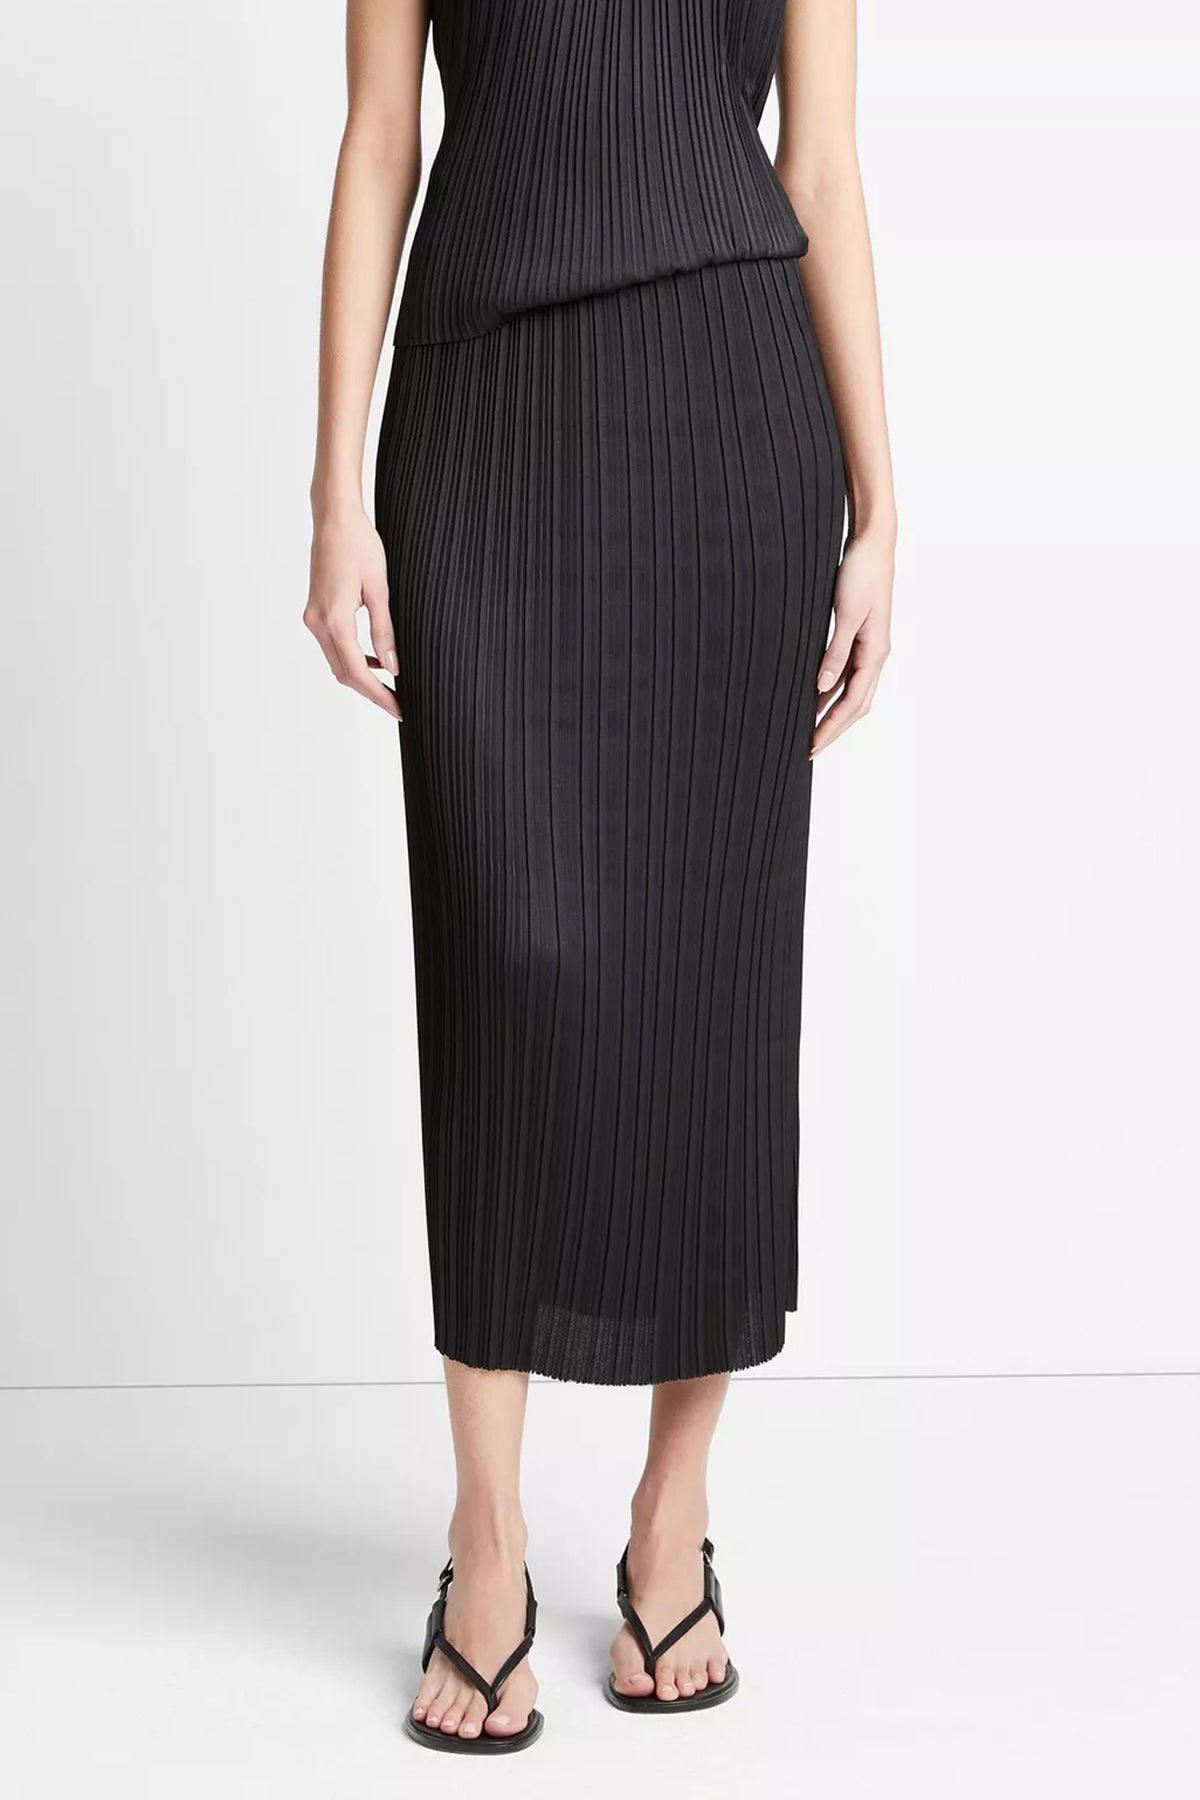 Pleated Satin Straight Pull-On Skirt in Black - shop-olivia.com